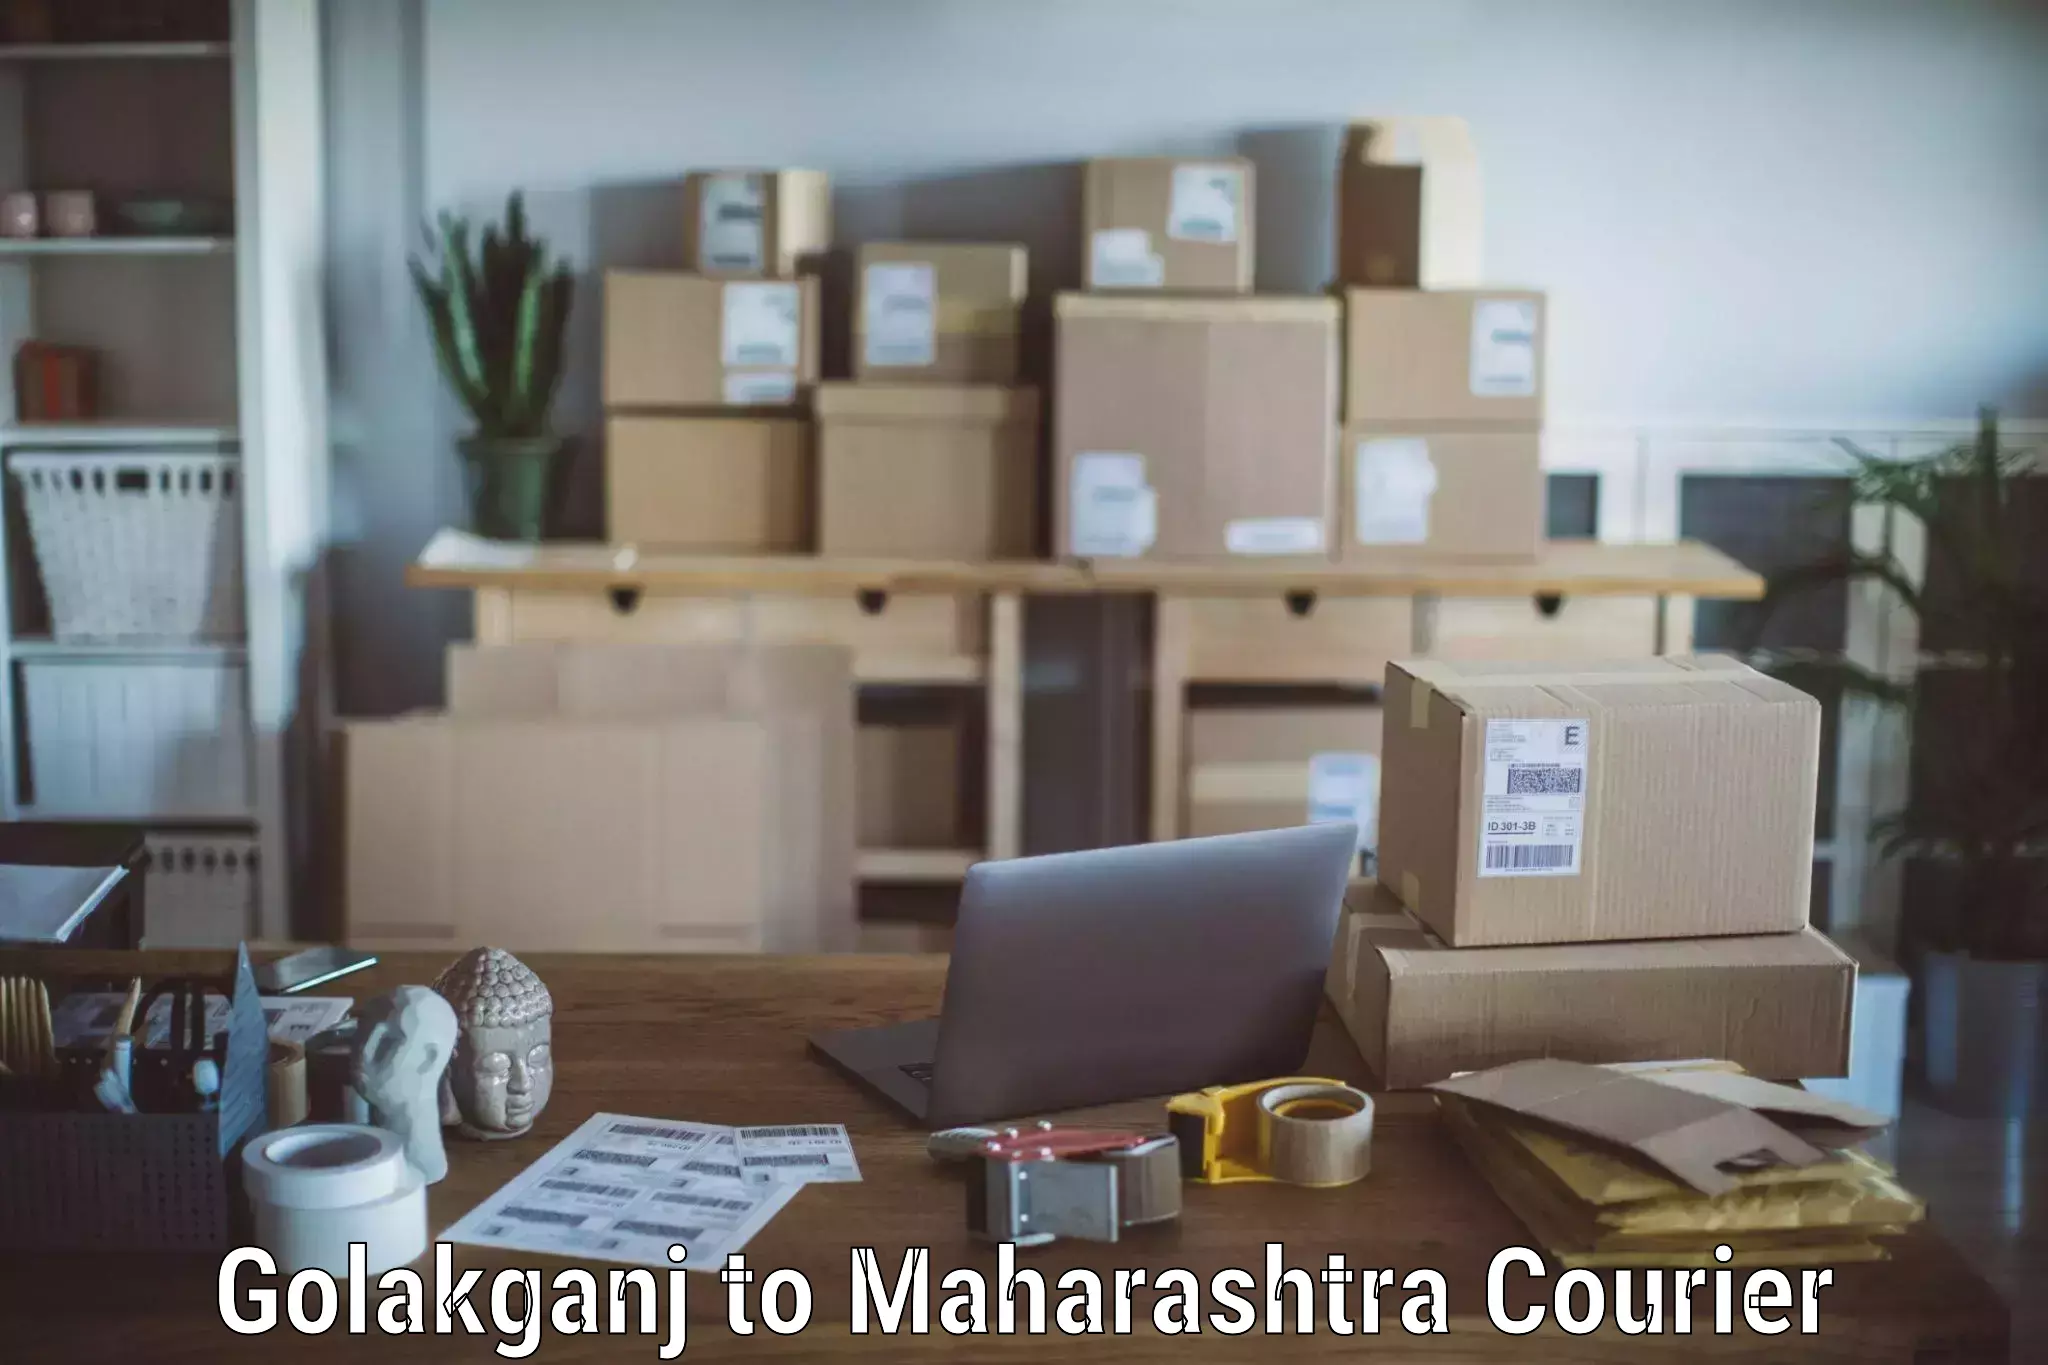 Cost-effective moving options Golakganj to IIT Mumbai